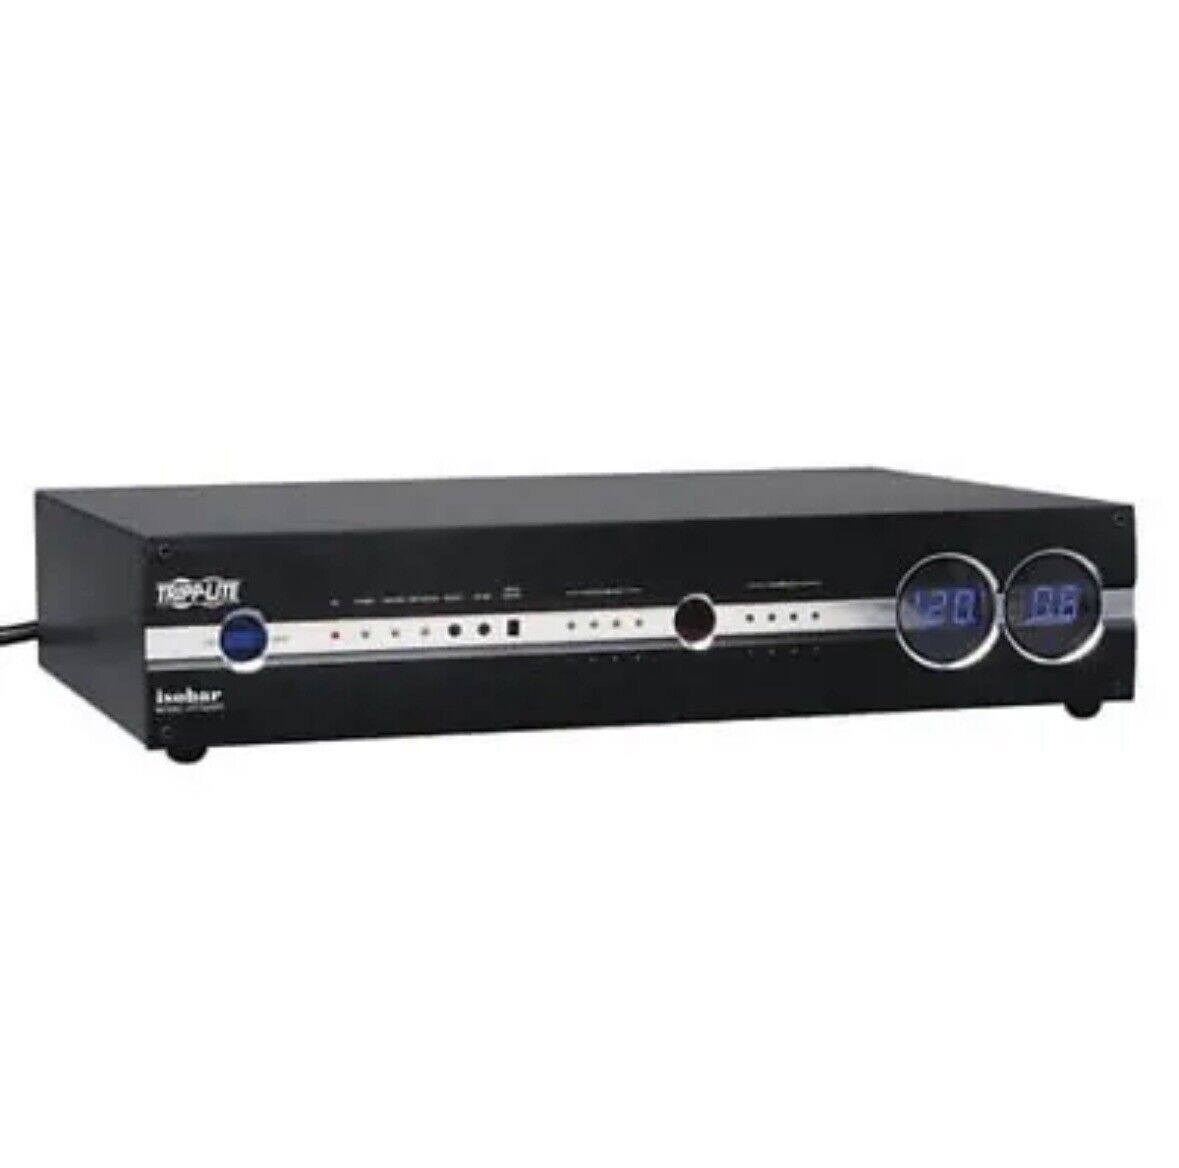 TrippLite HT7300PC Isobar Audio/ Video Power Conditioning Center 2U Rackmount